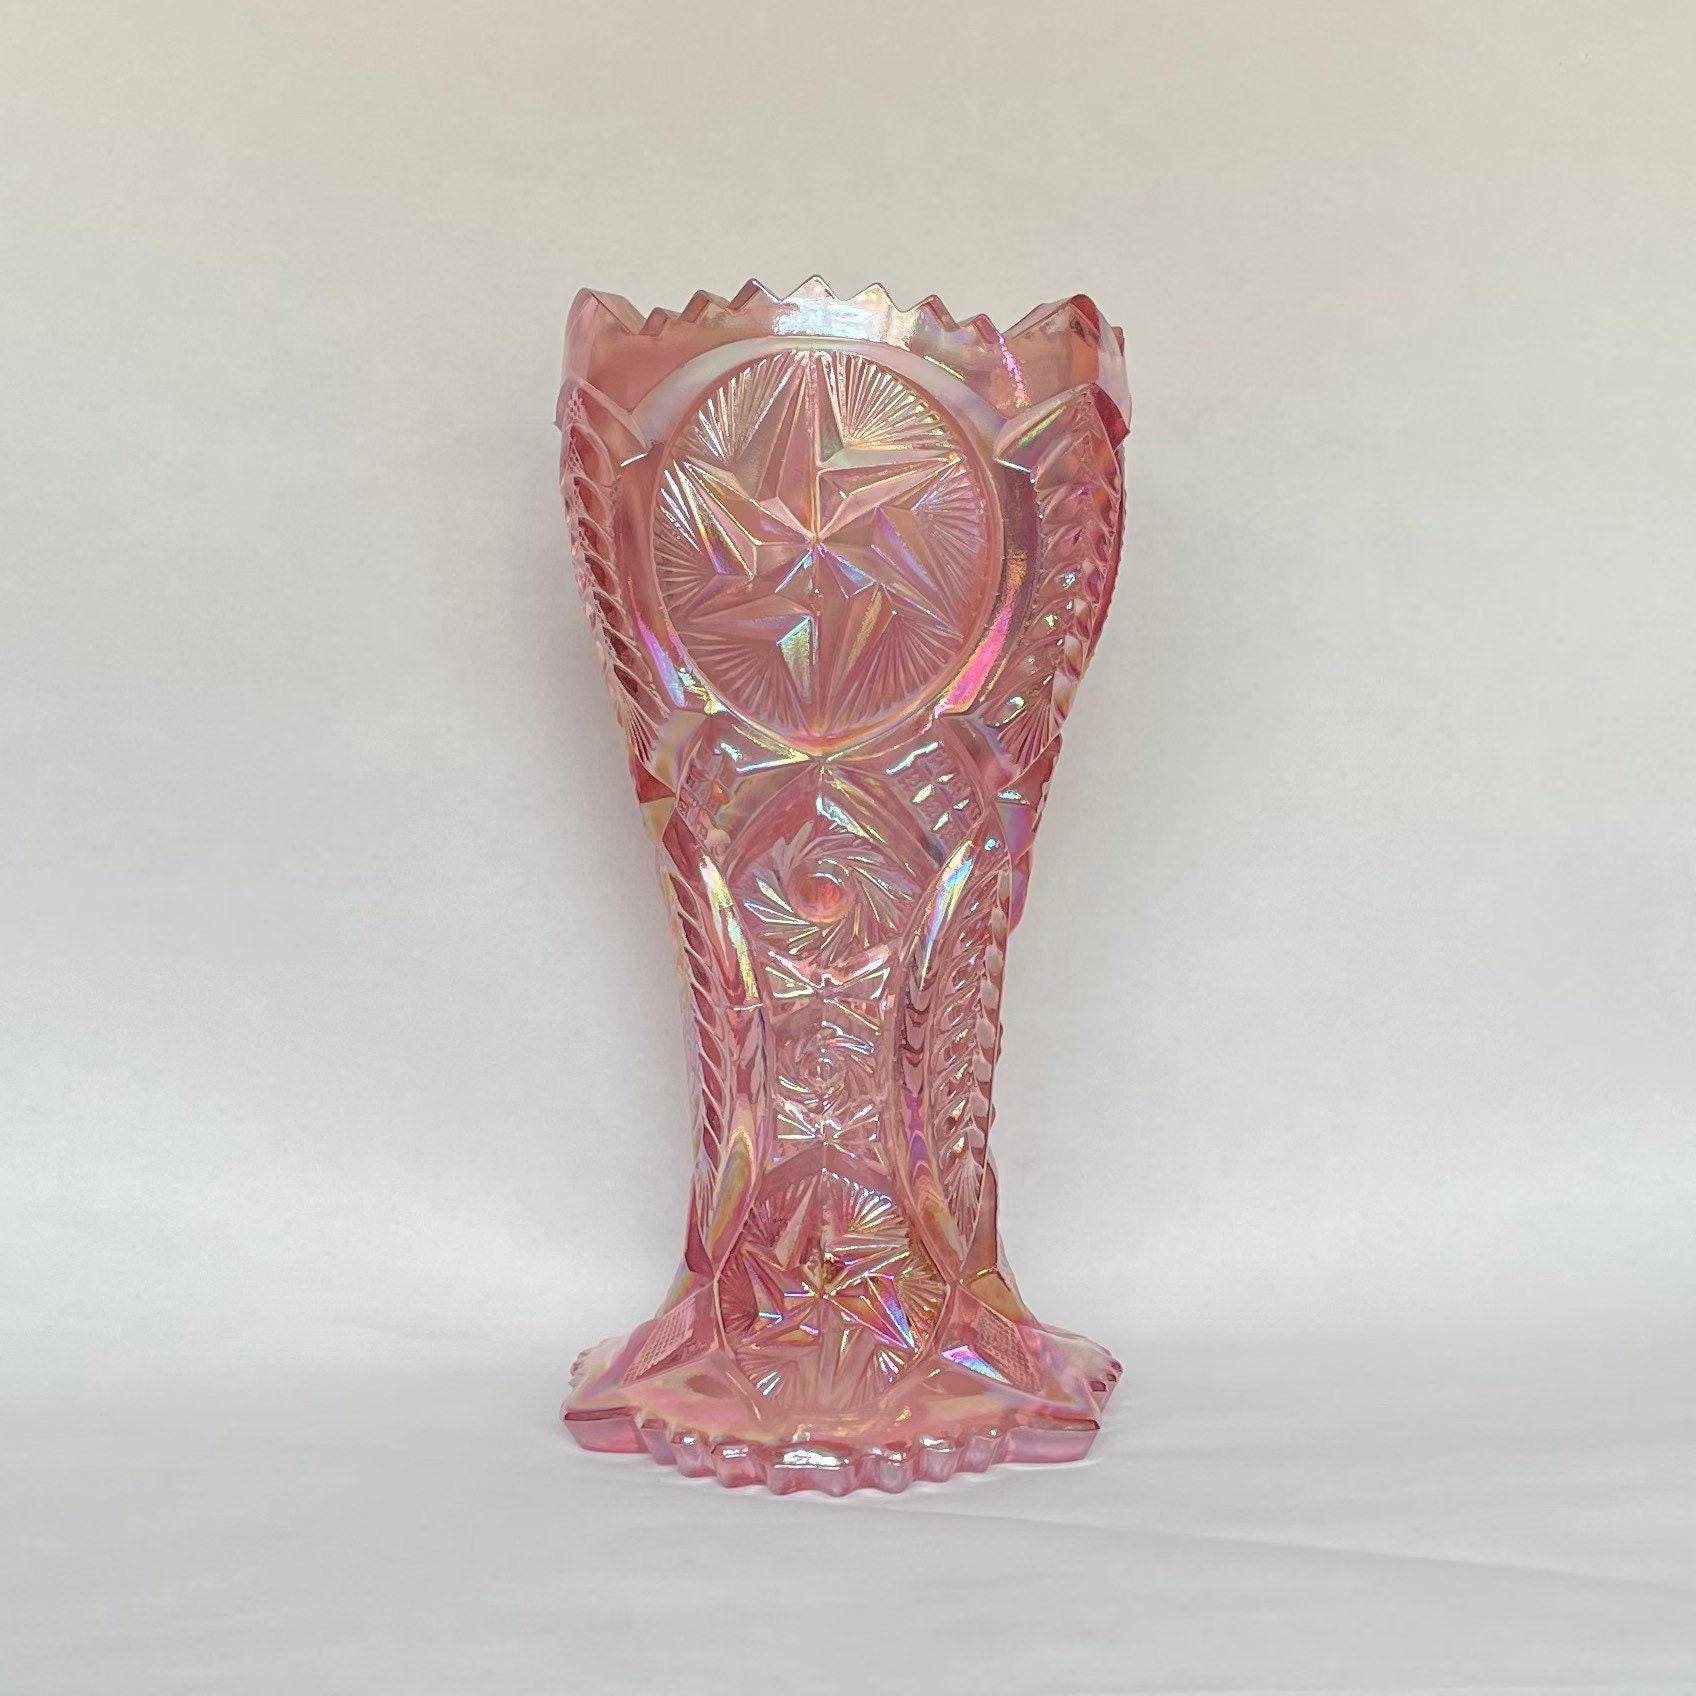 Doric Pink Depression Glass Salt & Pepper Shakers Jeannette Glass Co. -  Ruby Lane